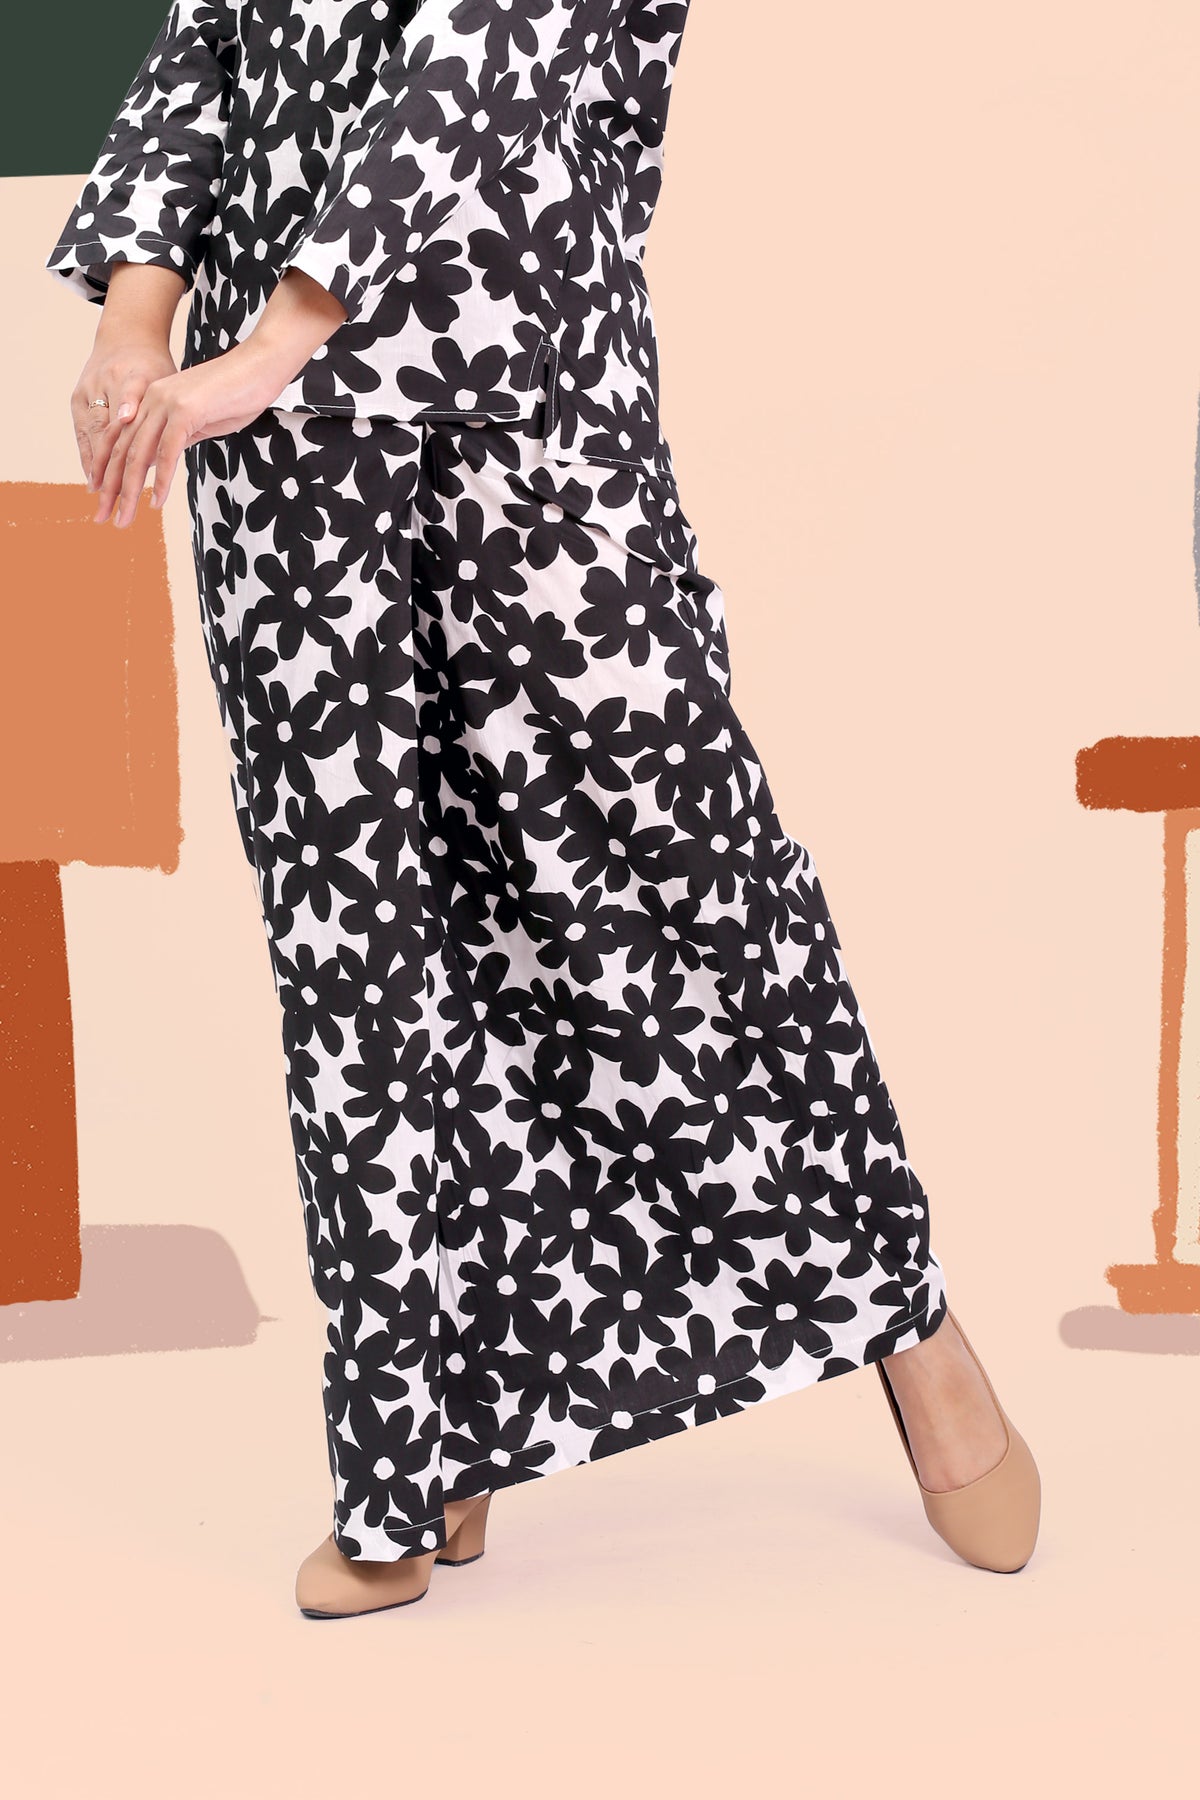 baju raya family sedondon adult woman classic skirt daisy print